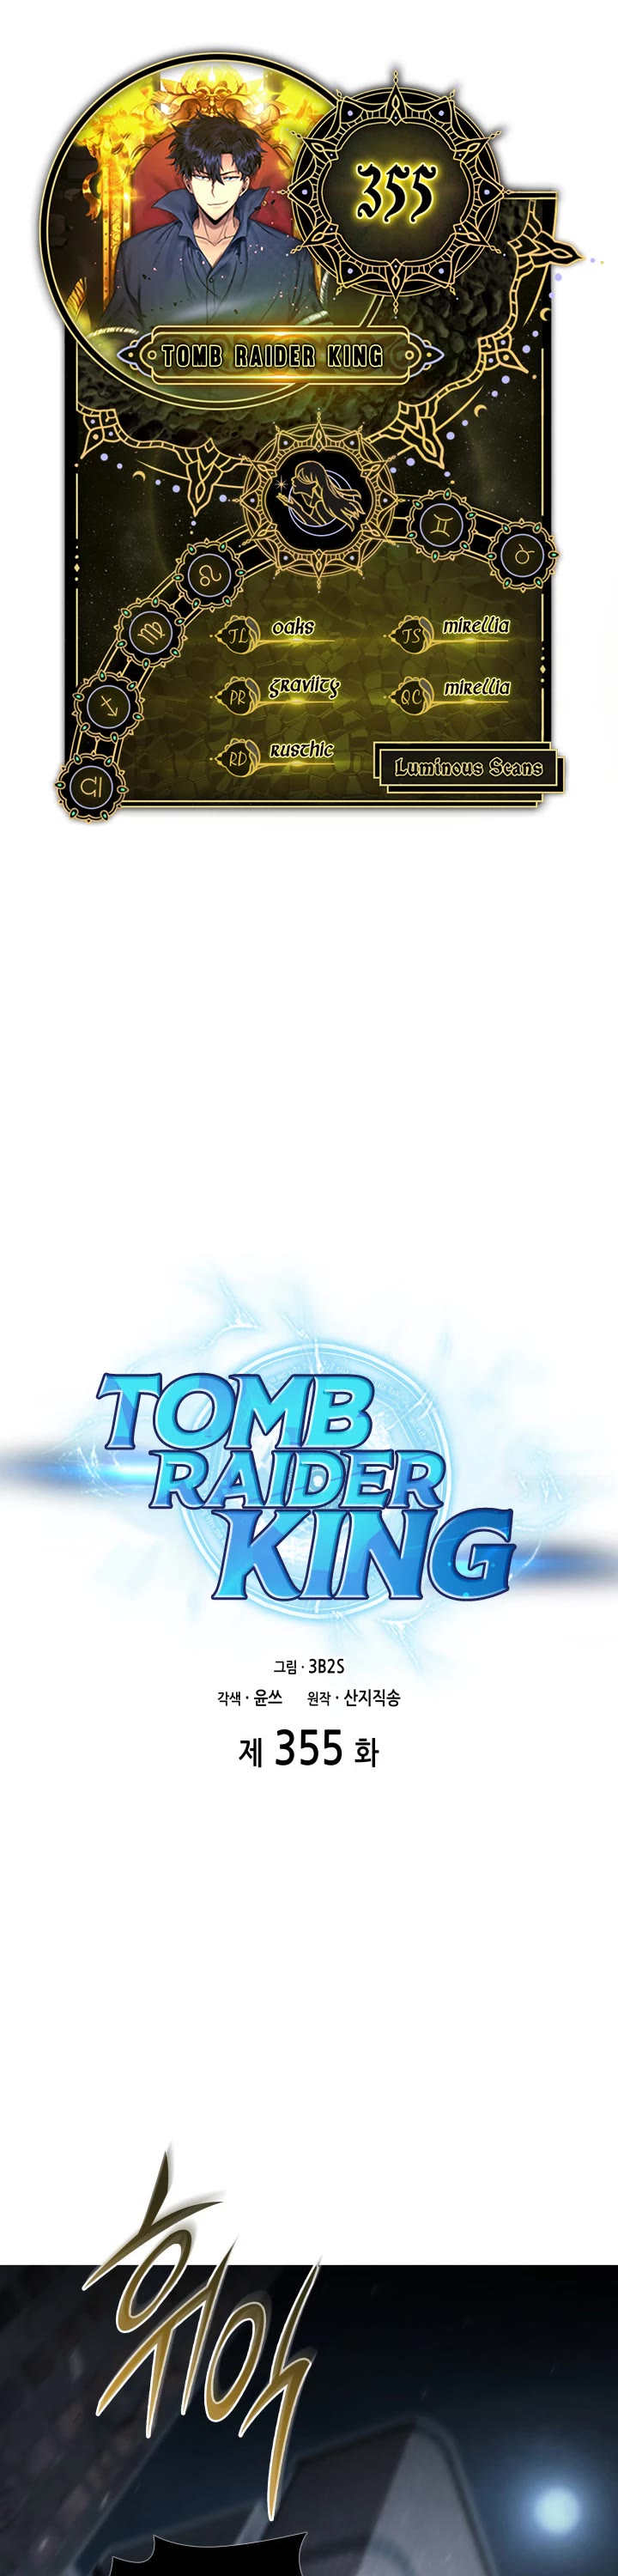 Tomb Raider King - Page 1